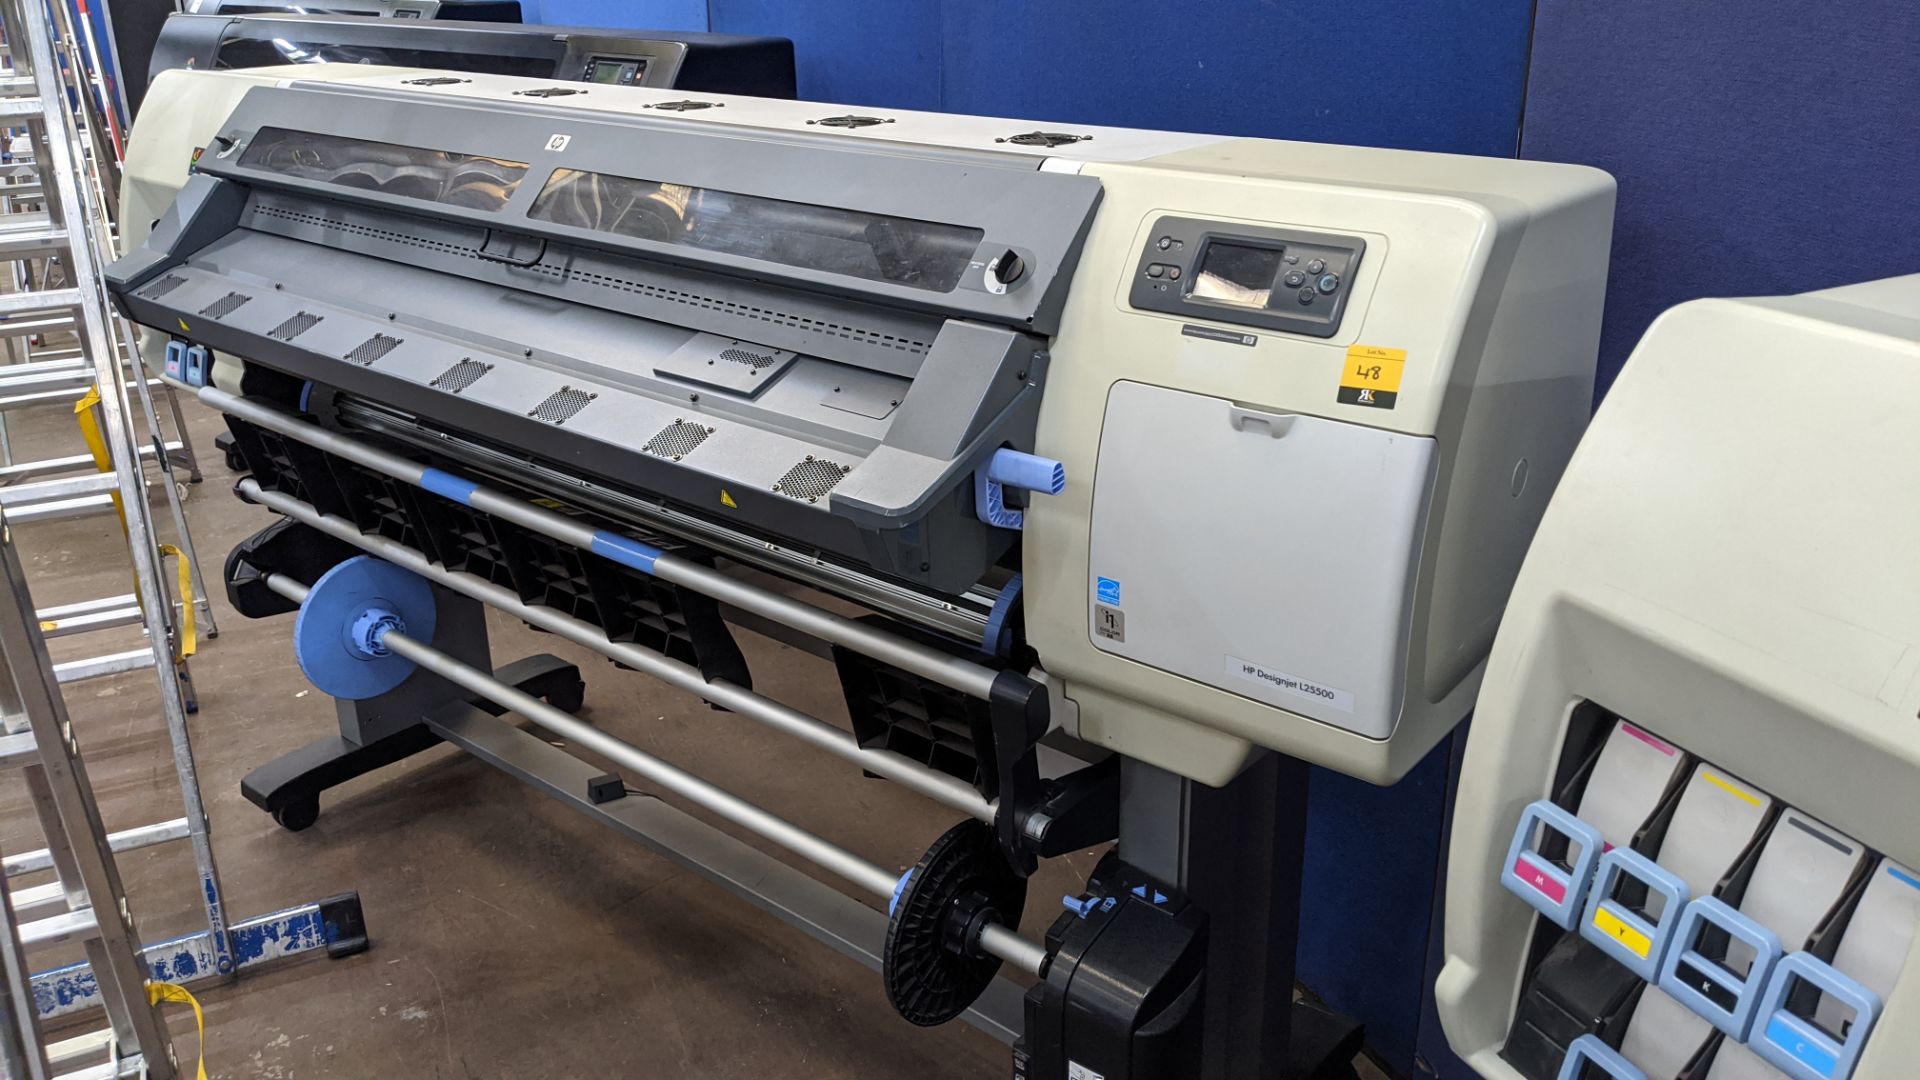 HP DesignJet L25500 wide format printer, serial no